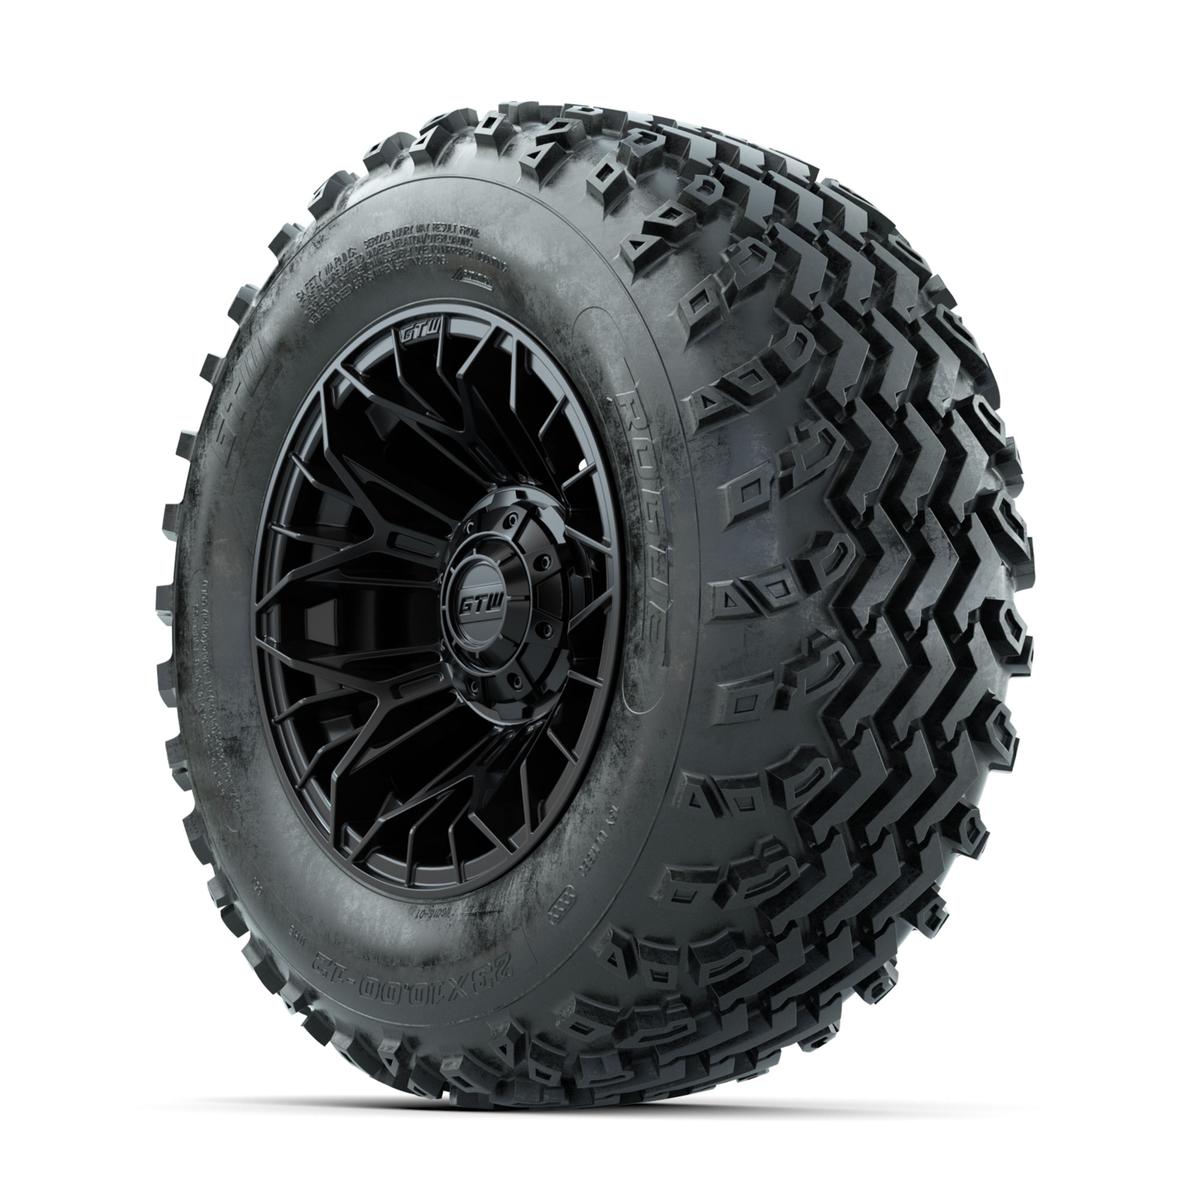 GTW Stellar Black 12 in Wheels with 23x10.00-12 Rogue All Terrain Tires – Full Set